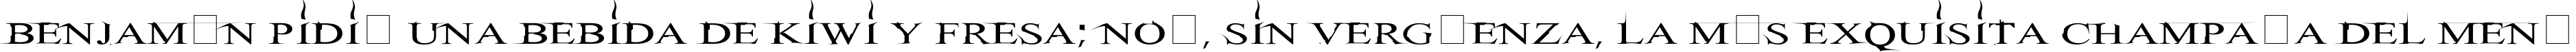 Пример написания шрифтом Hitman текста на испанском